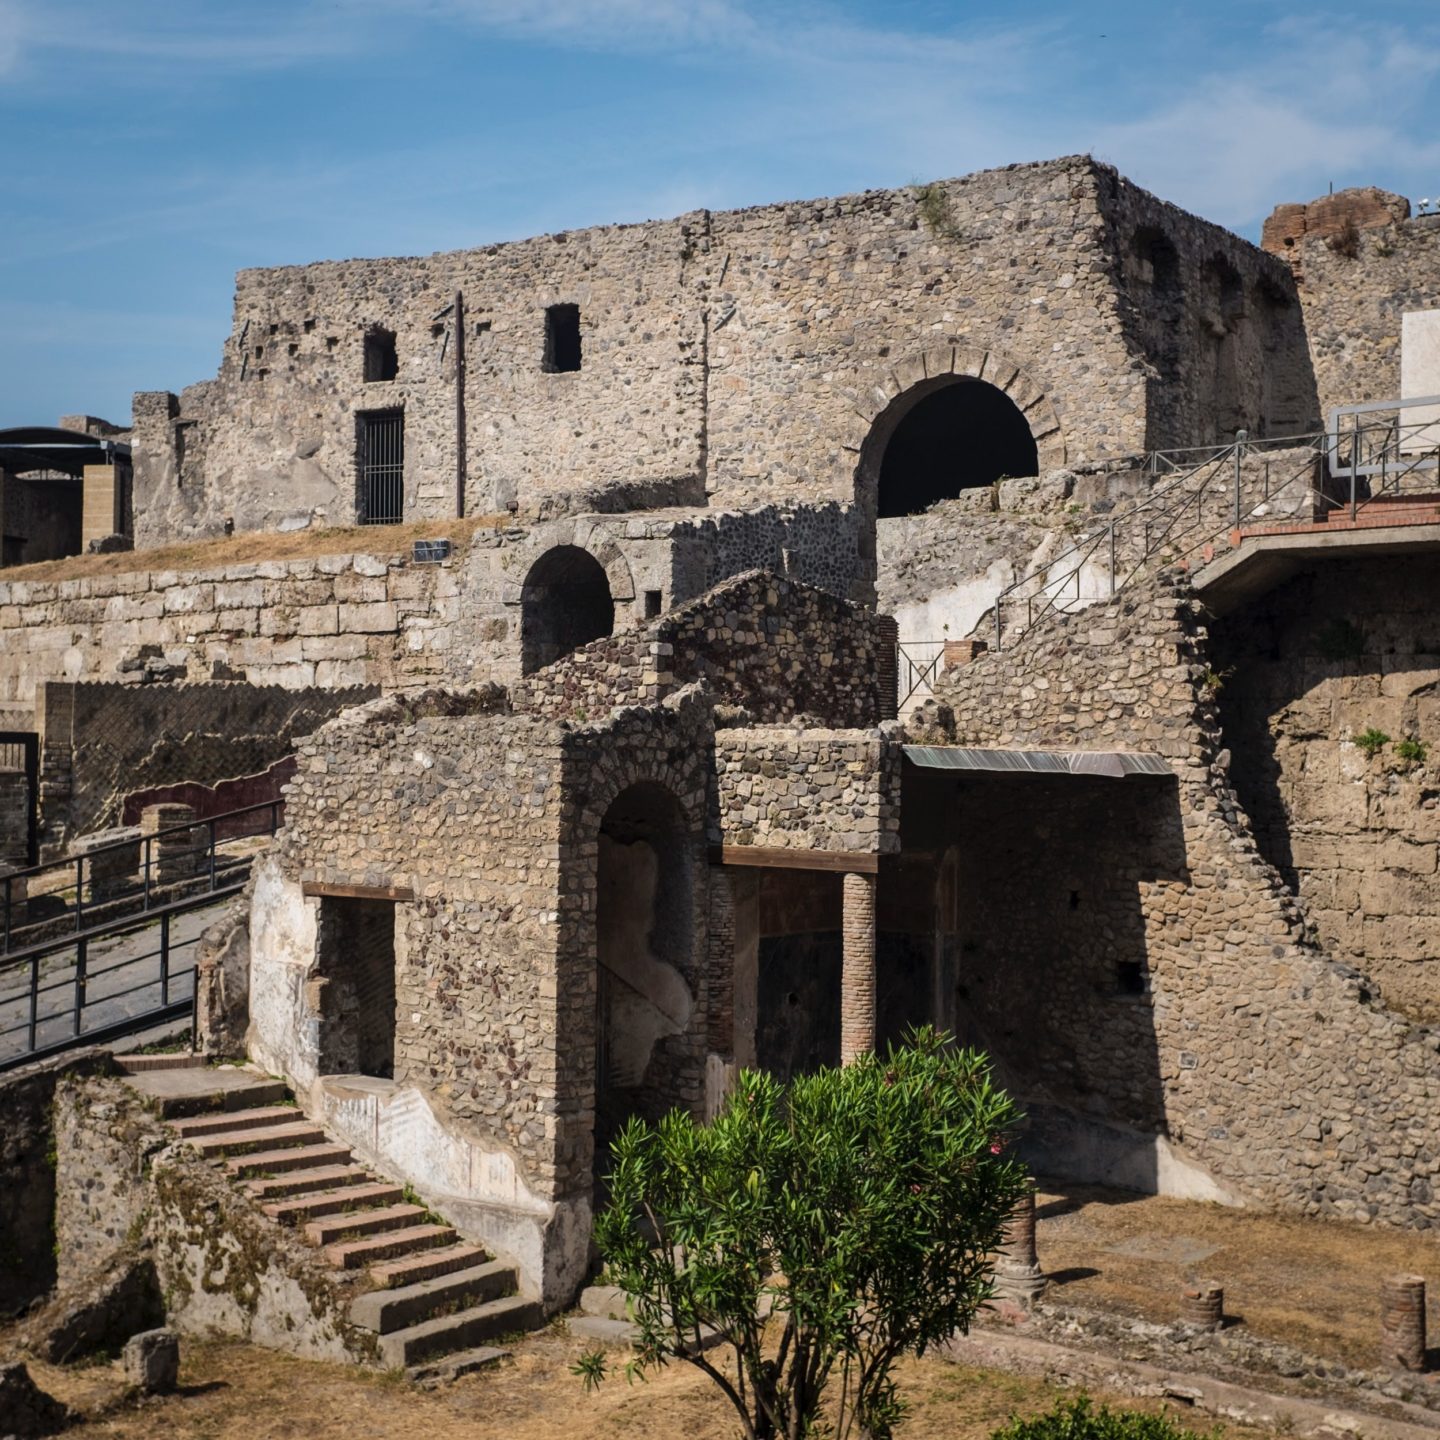 Remains of Pompeii - visit when touring amalfi coastline